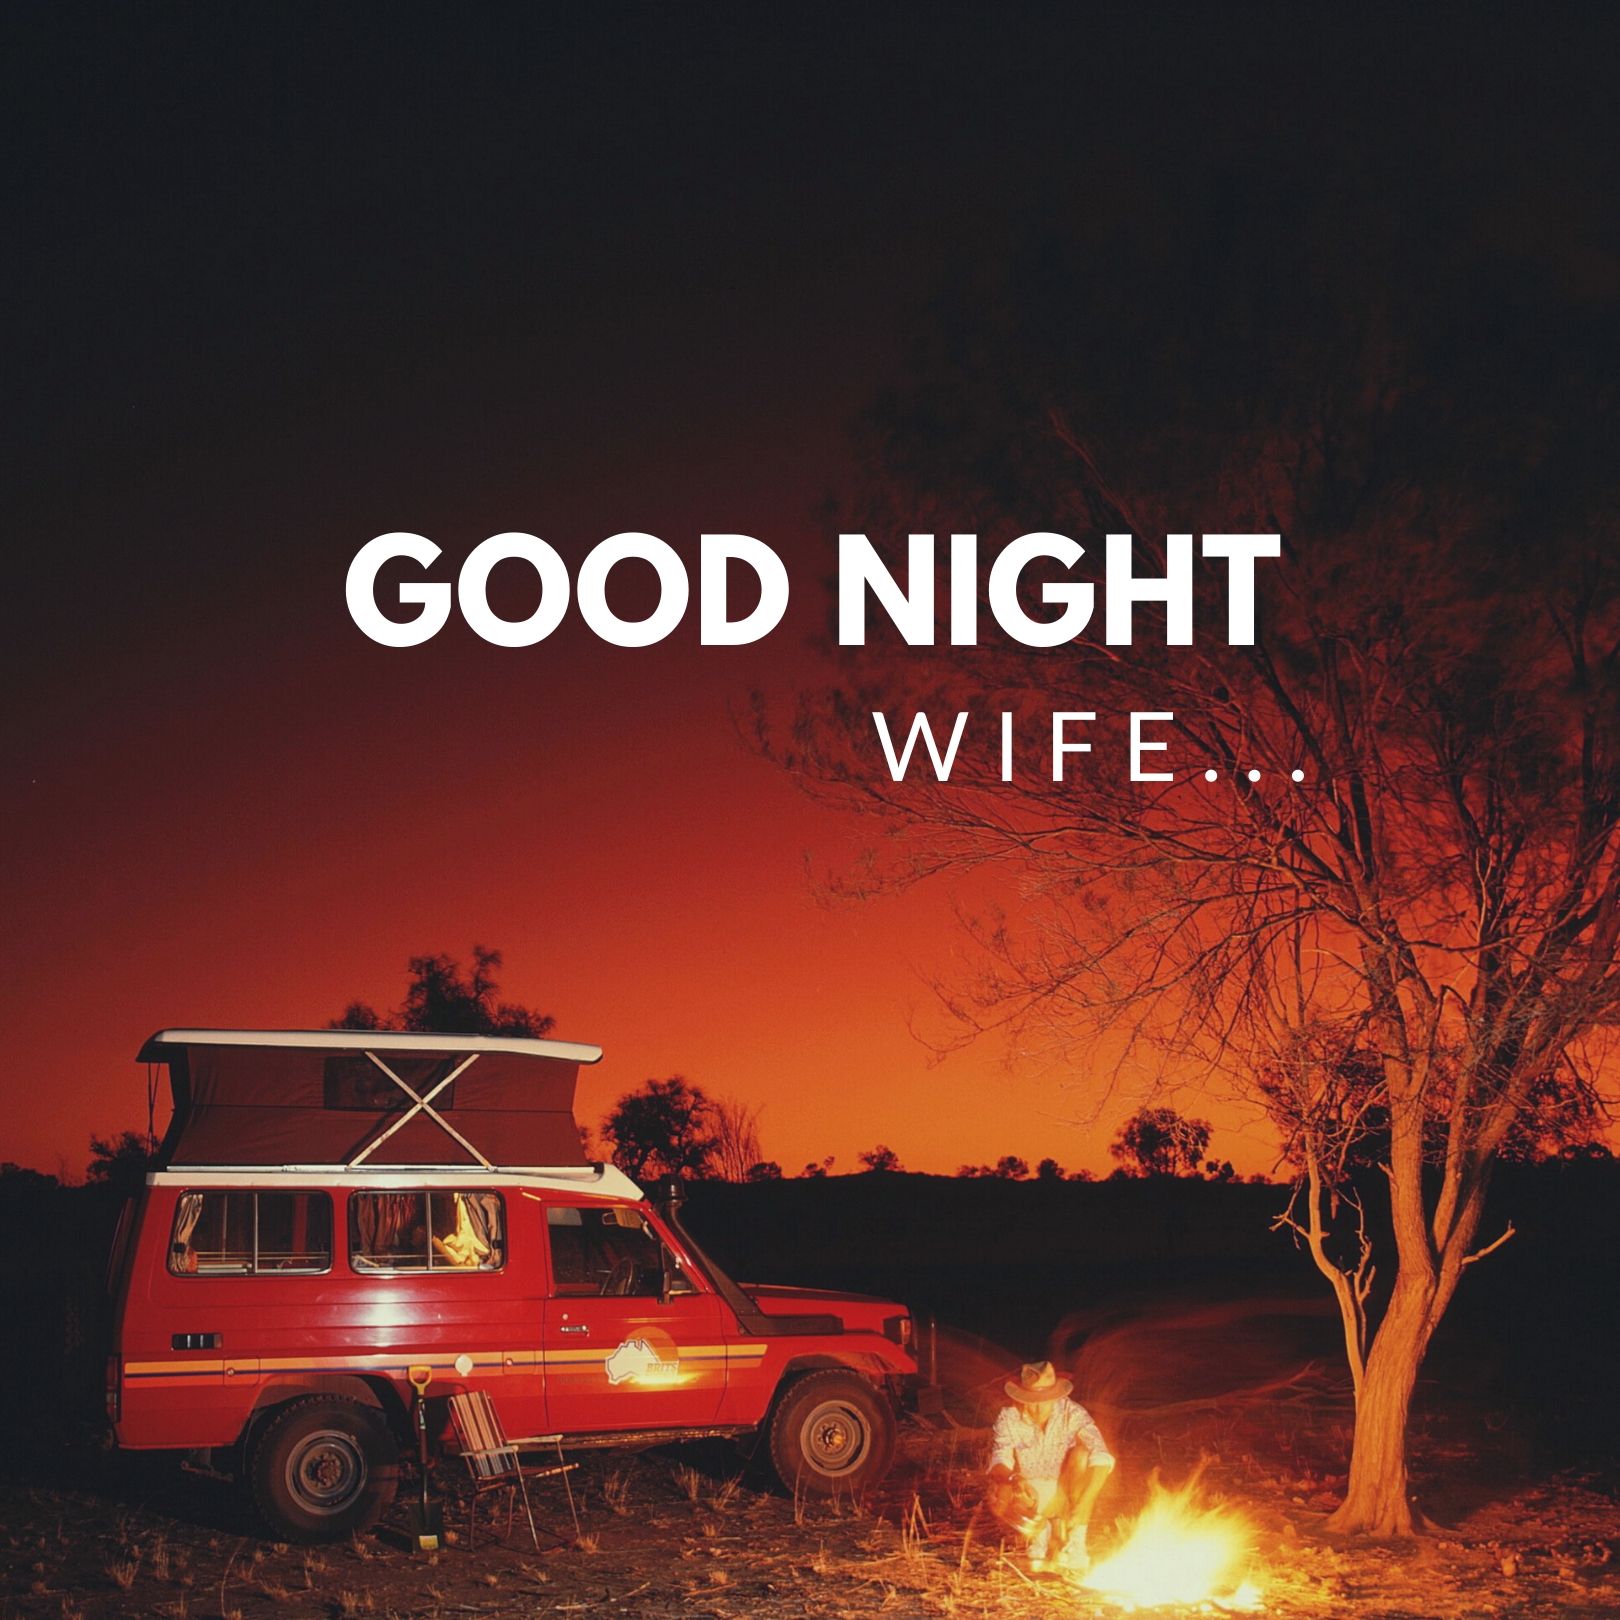 Good Night Wife Image